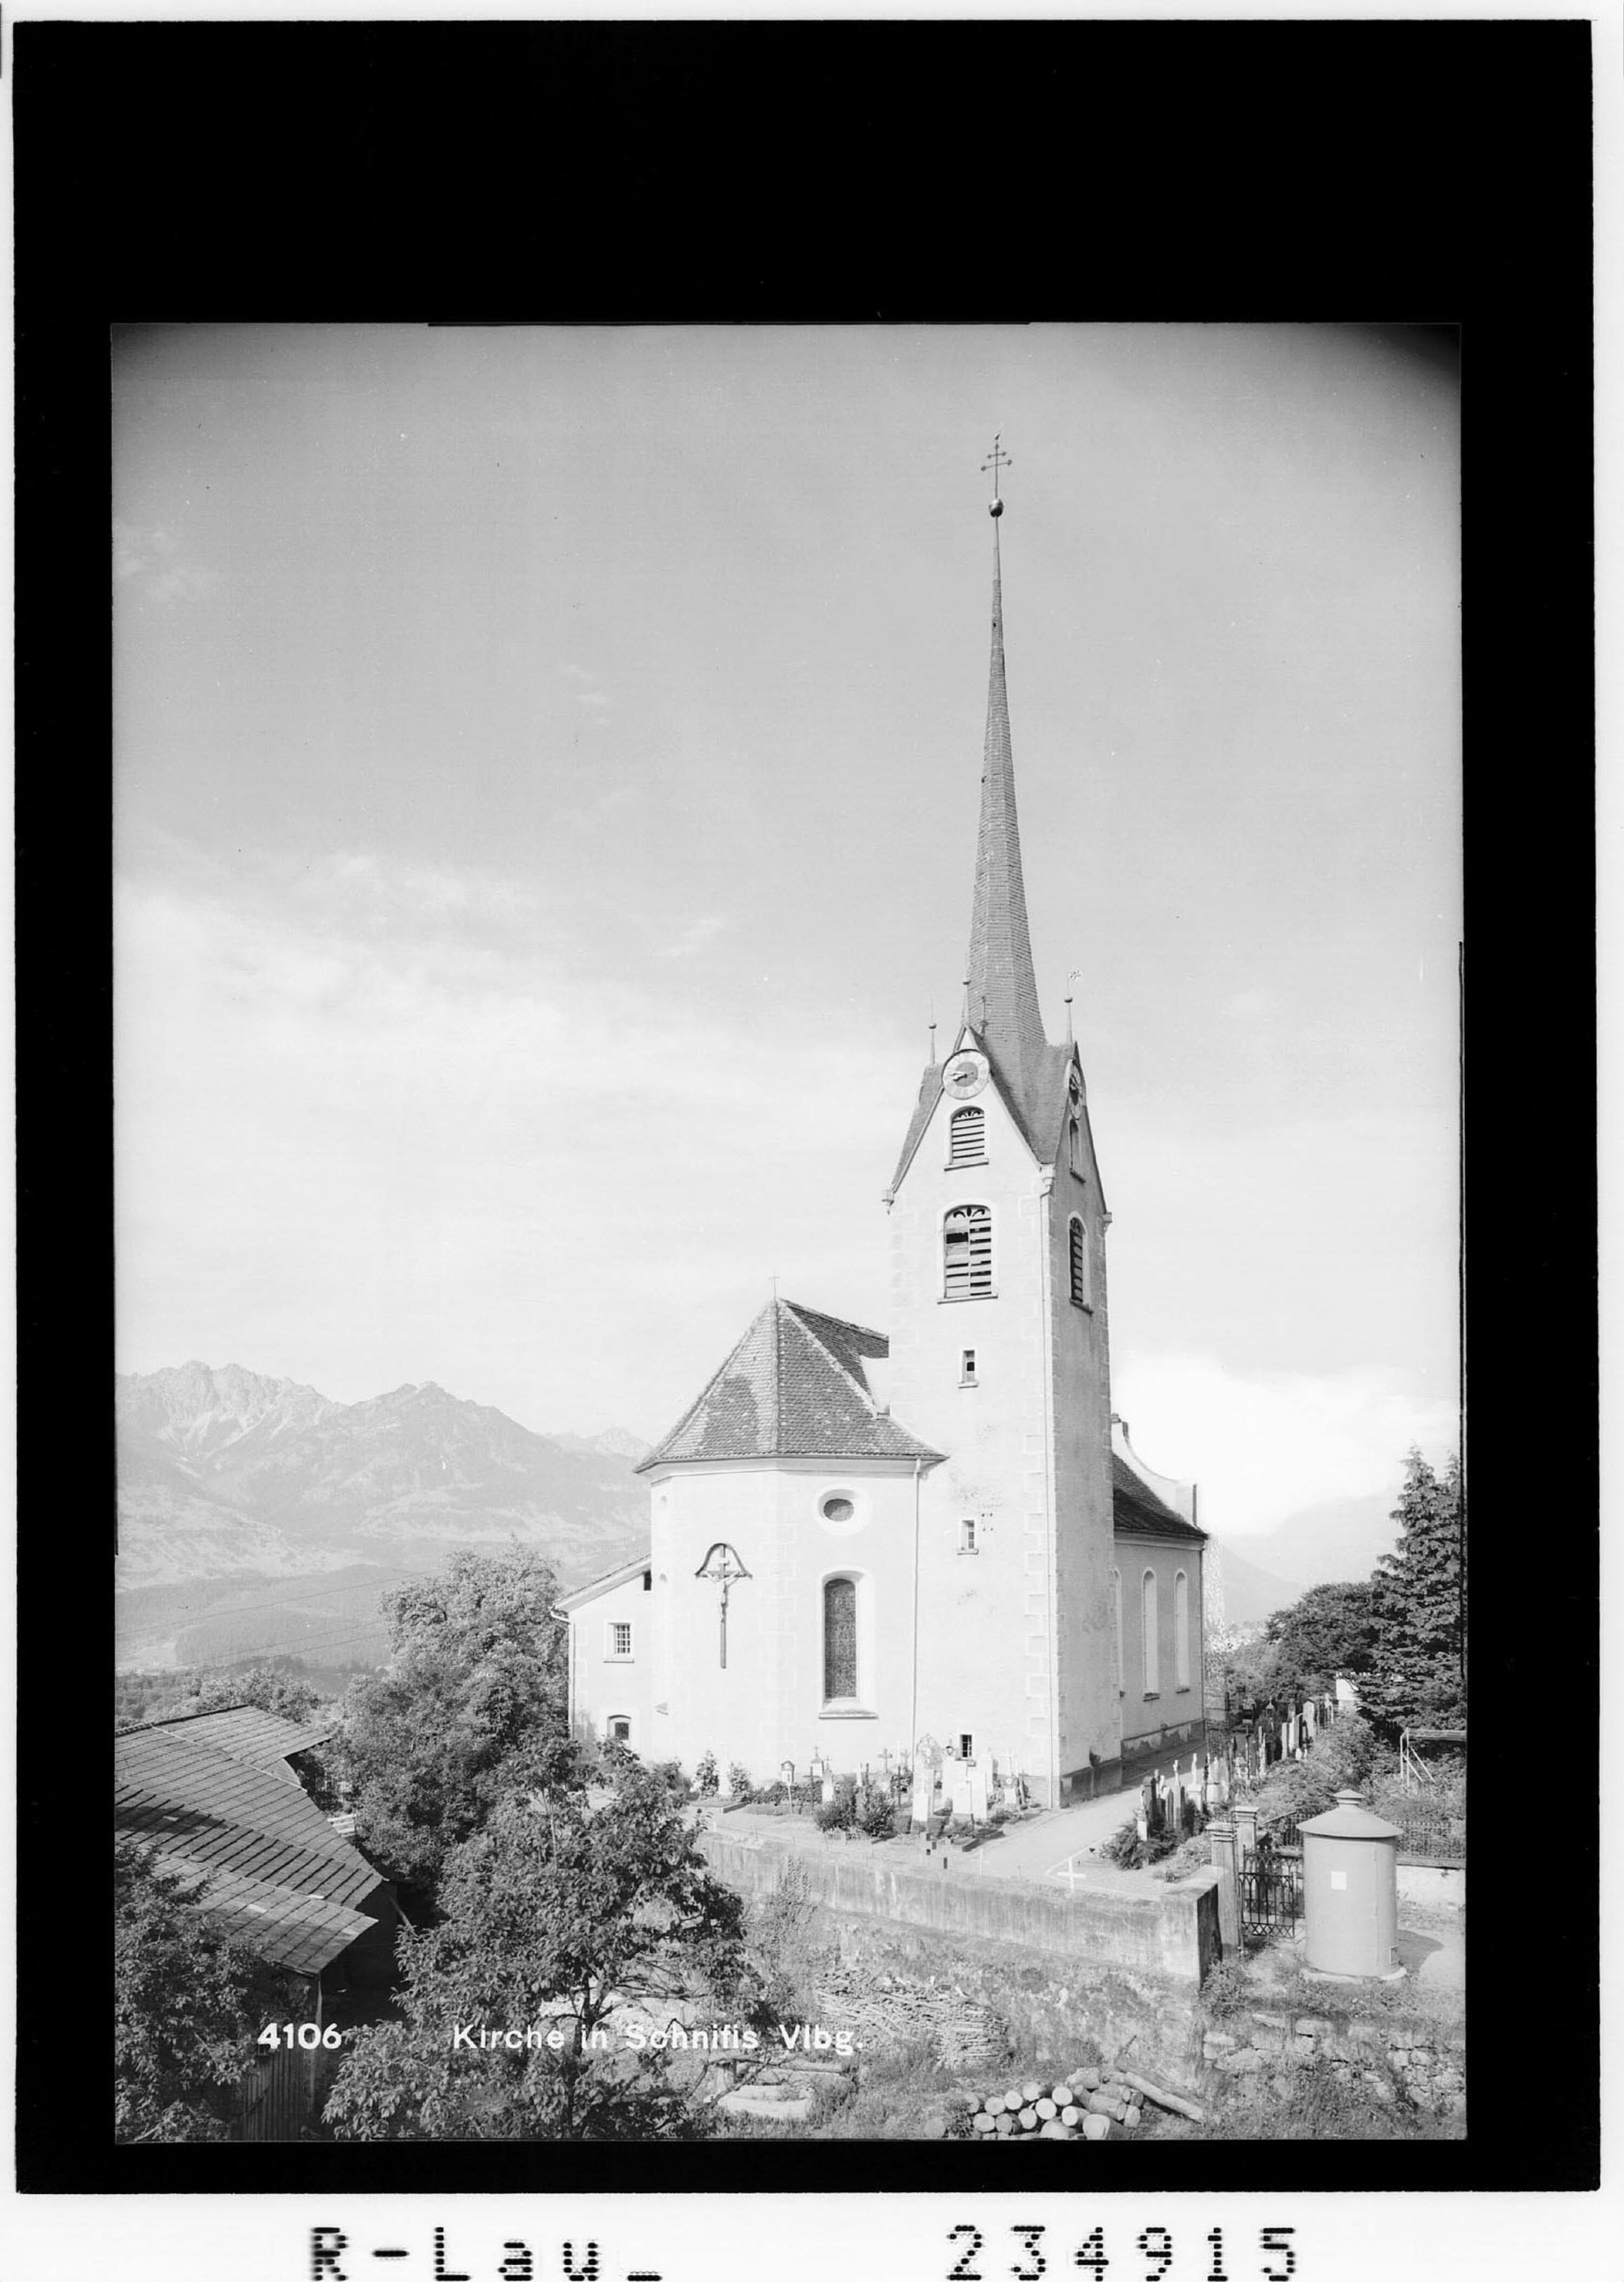 Kirche in Schnifis / Vorarlberg></div>


    <hr>
    <div class=